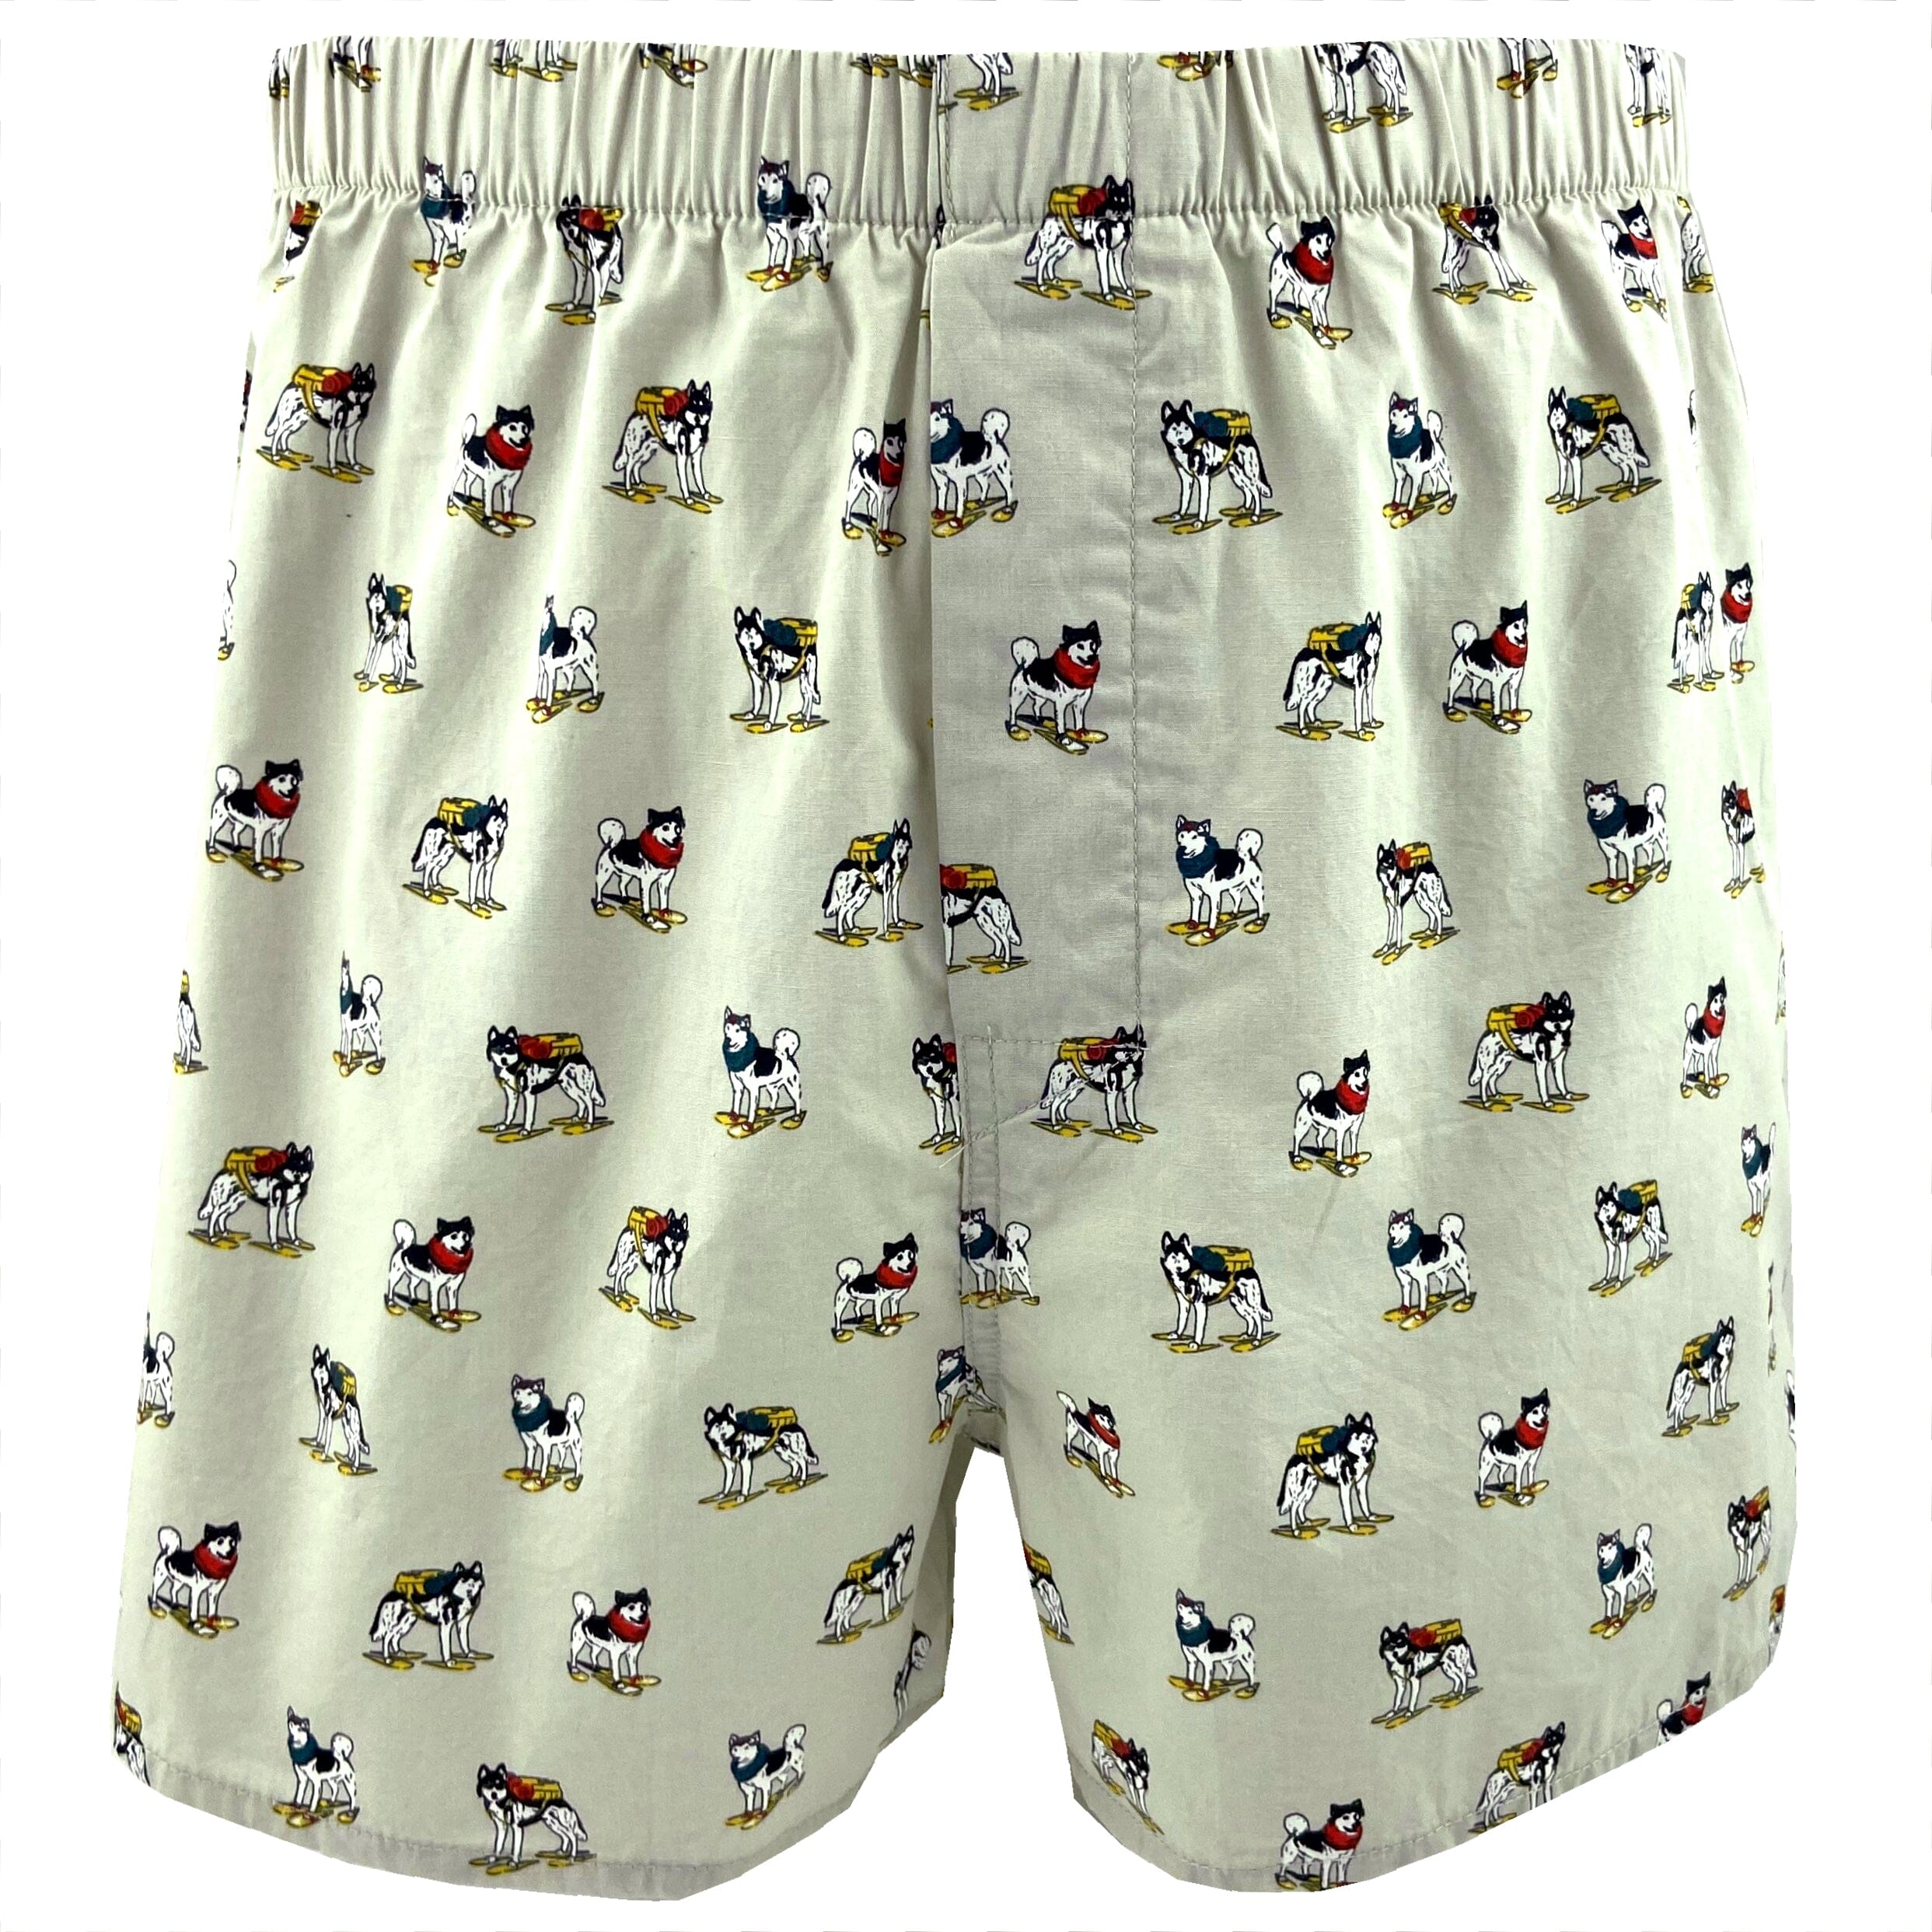 Husky Patterned Boxers For Men. Buy Men's Dog Print Boxer Shorts Here